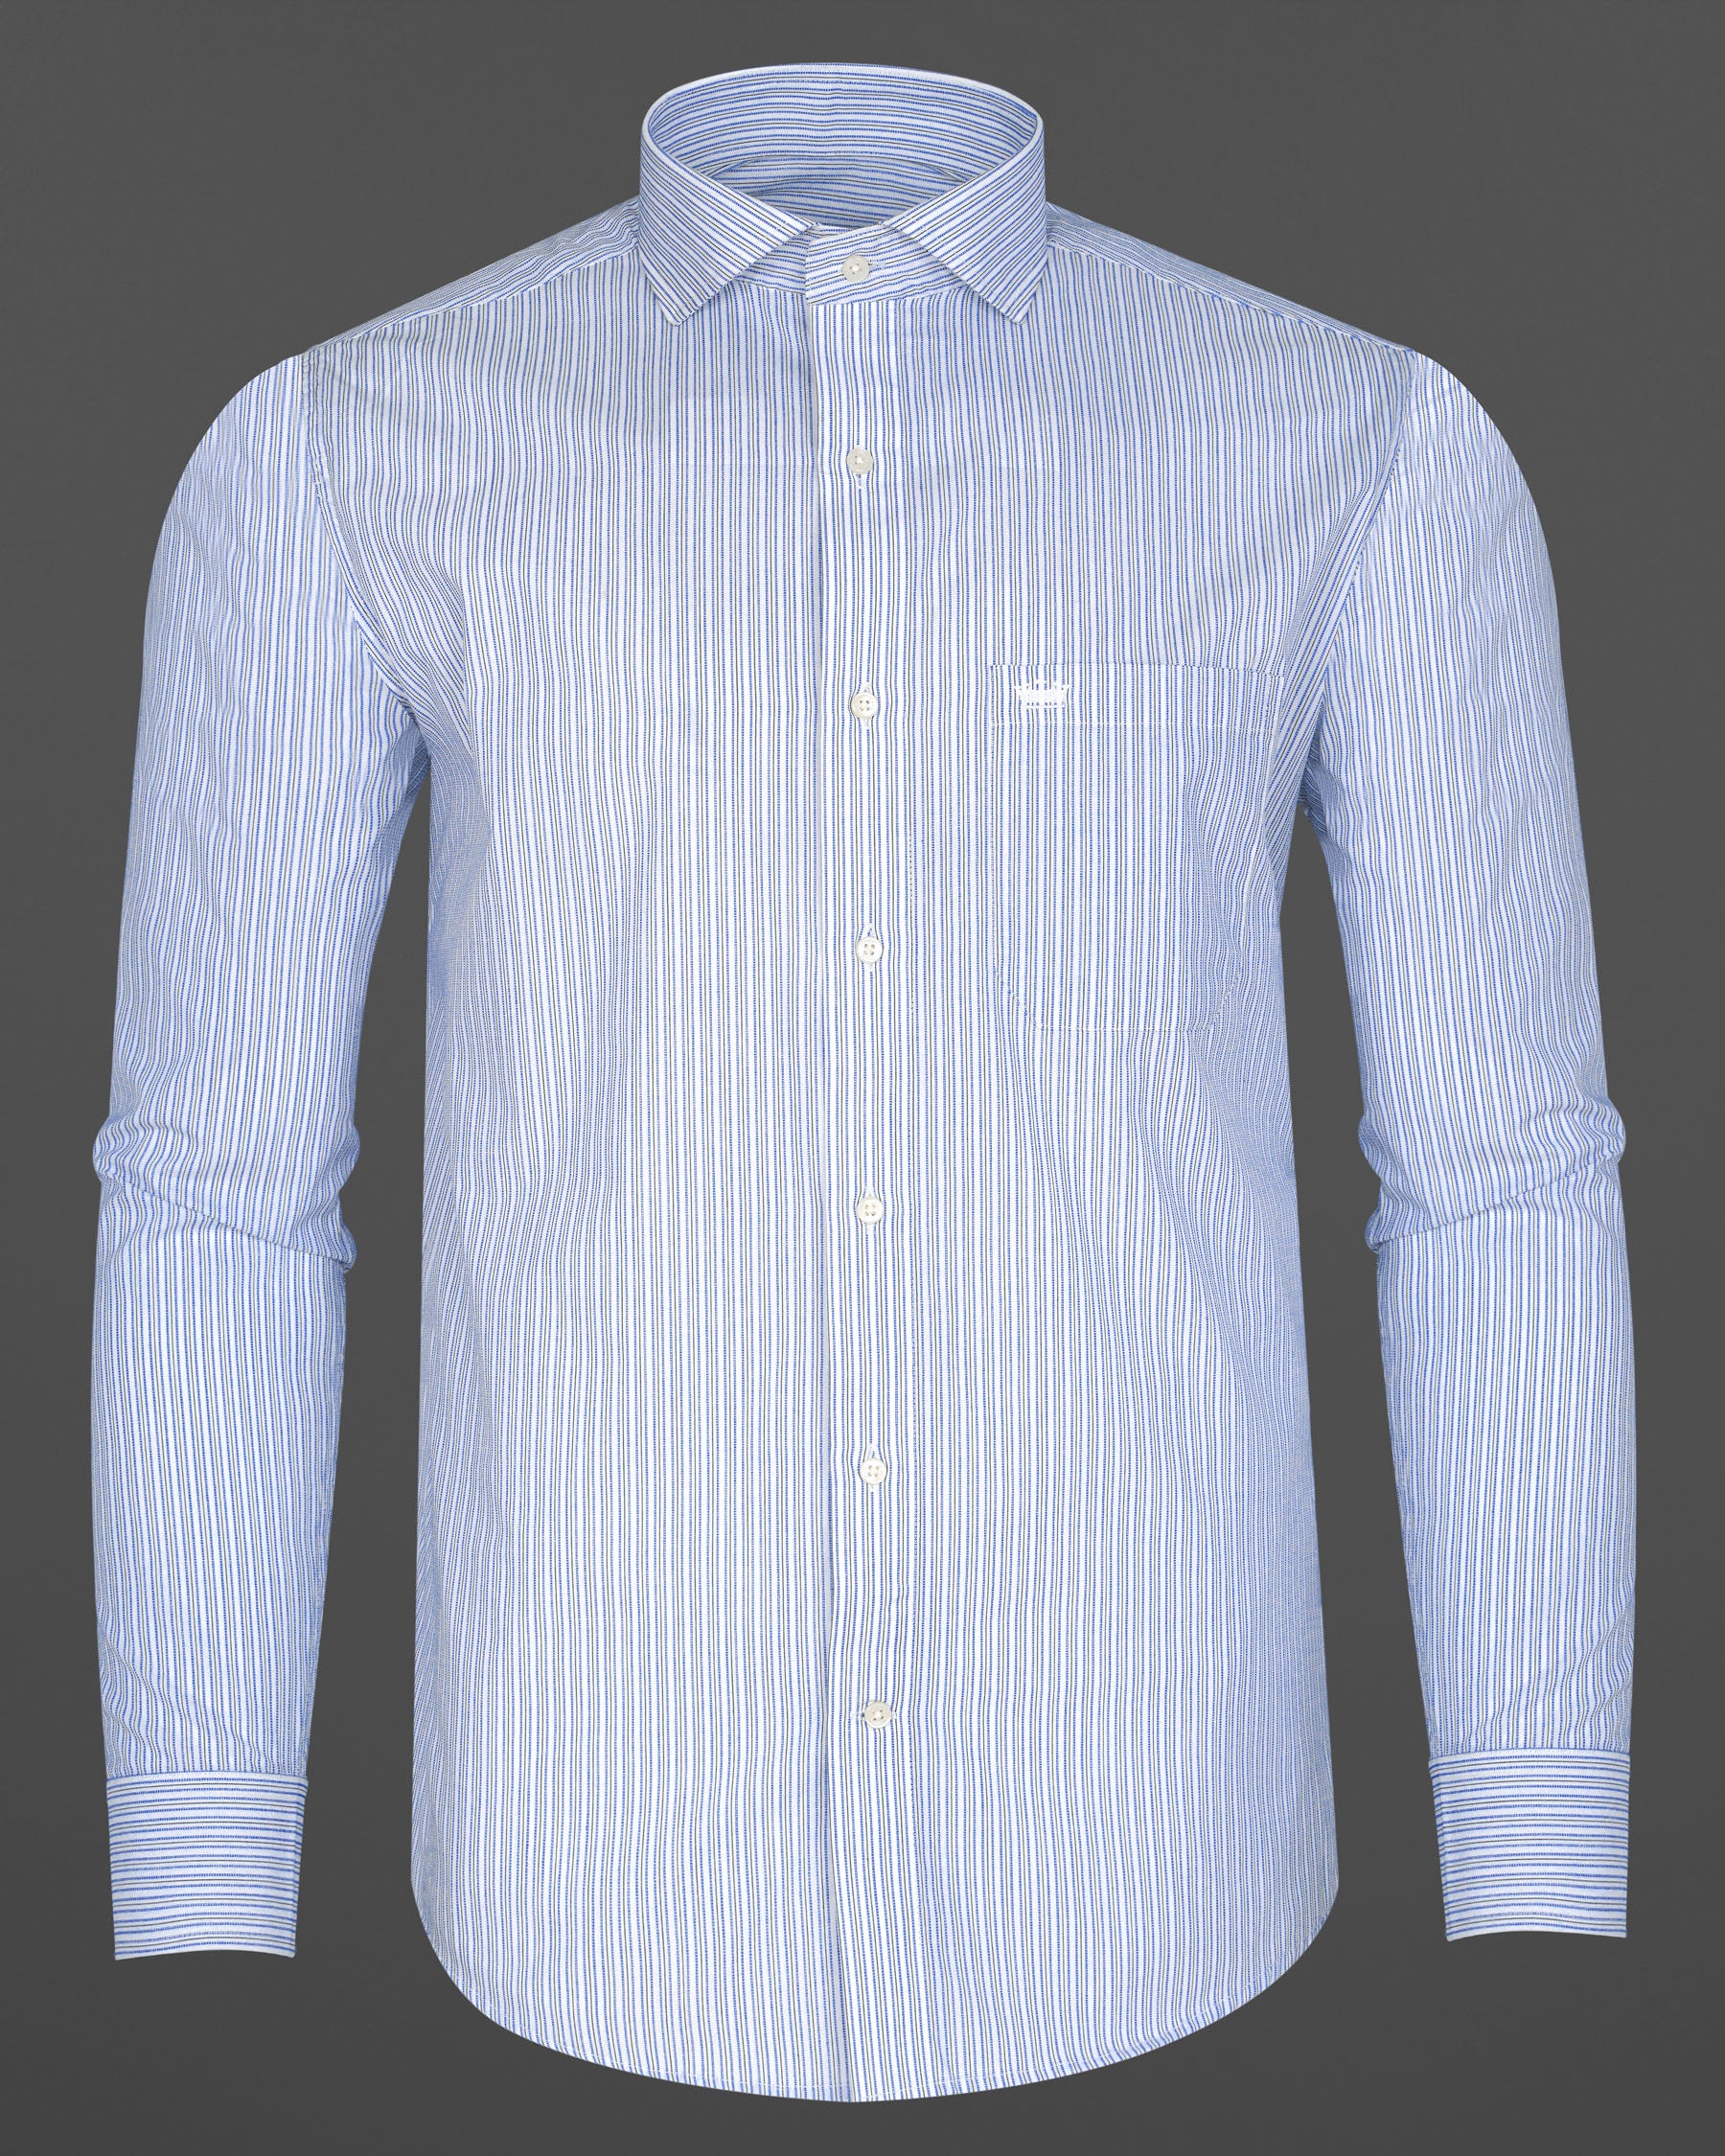 Glaucous Blue with White Striped Dobby Textured Premium Giza Cotton Shirt 8000-CA,8000-CA-H-38,8000-CA-39,8000-CA-H-39,8000-CA-40,8000-CA-H-40,8000-CA-42,8000-CA-H-42,8000-CA-44,8000-CA-H-44,8000-CA-46,8000-CA-H-46,8000-CA-48,8000-CA-H-48,8000-CA-50,8000-CA-H-50,8000-CA-52,8000-CA-H-52